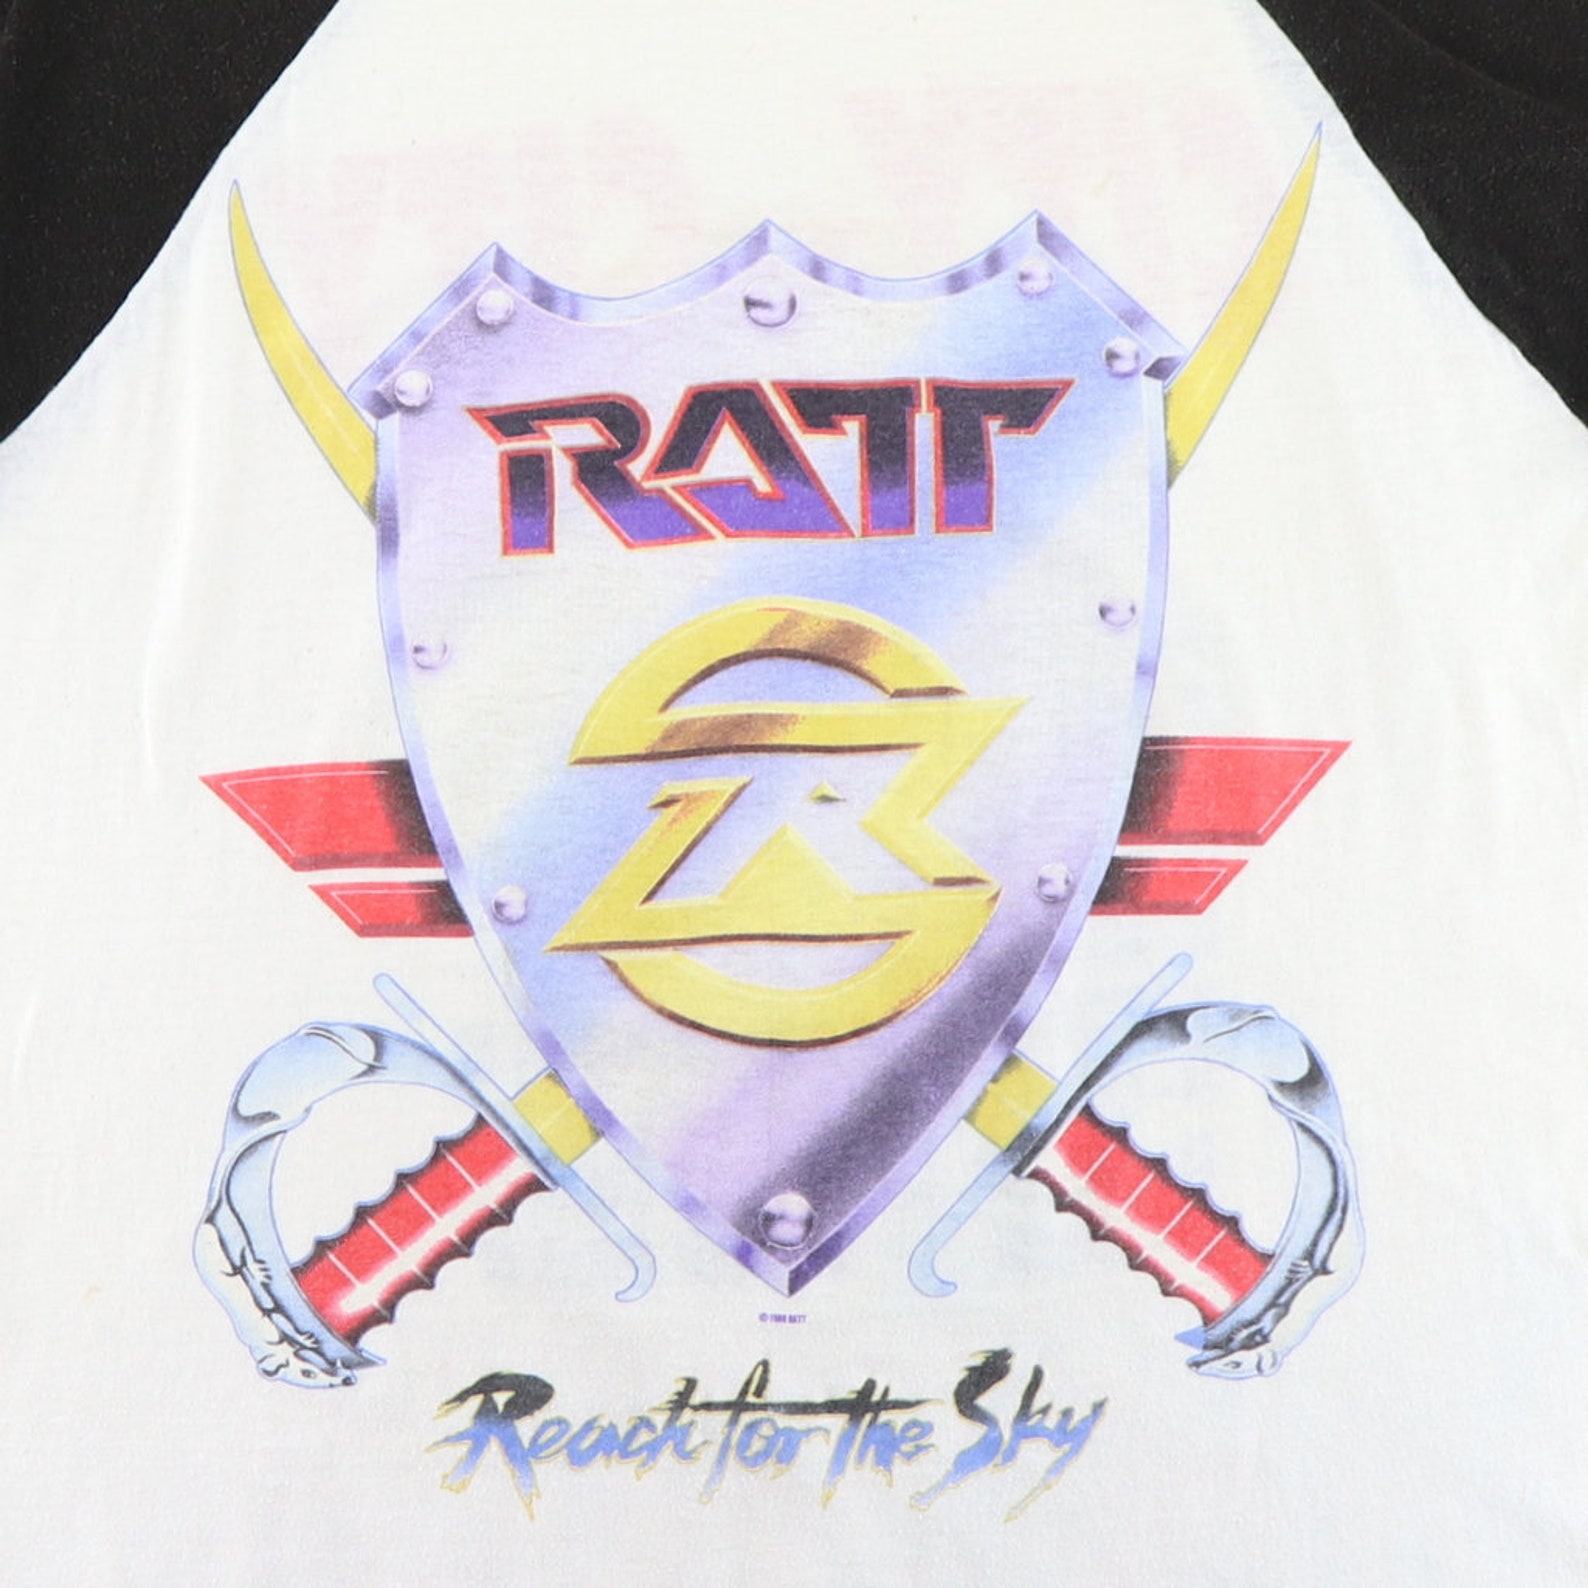 ratt city to city tour shirt